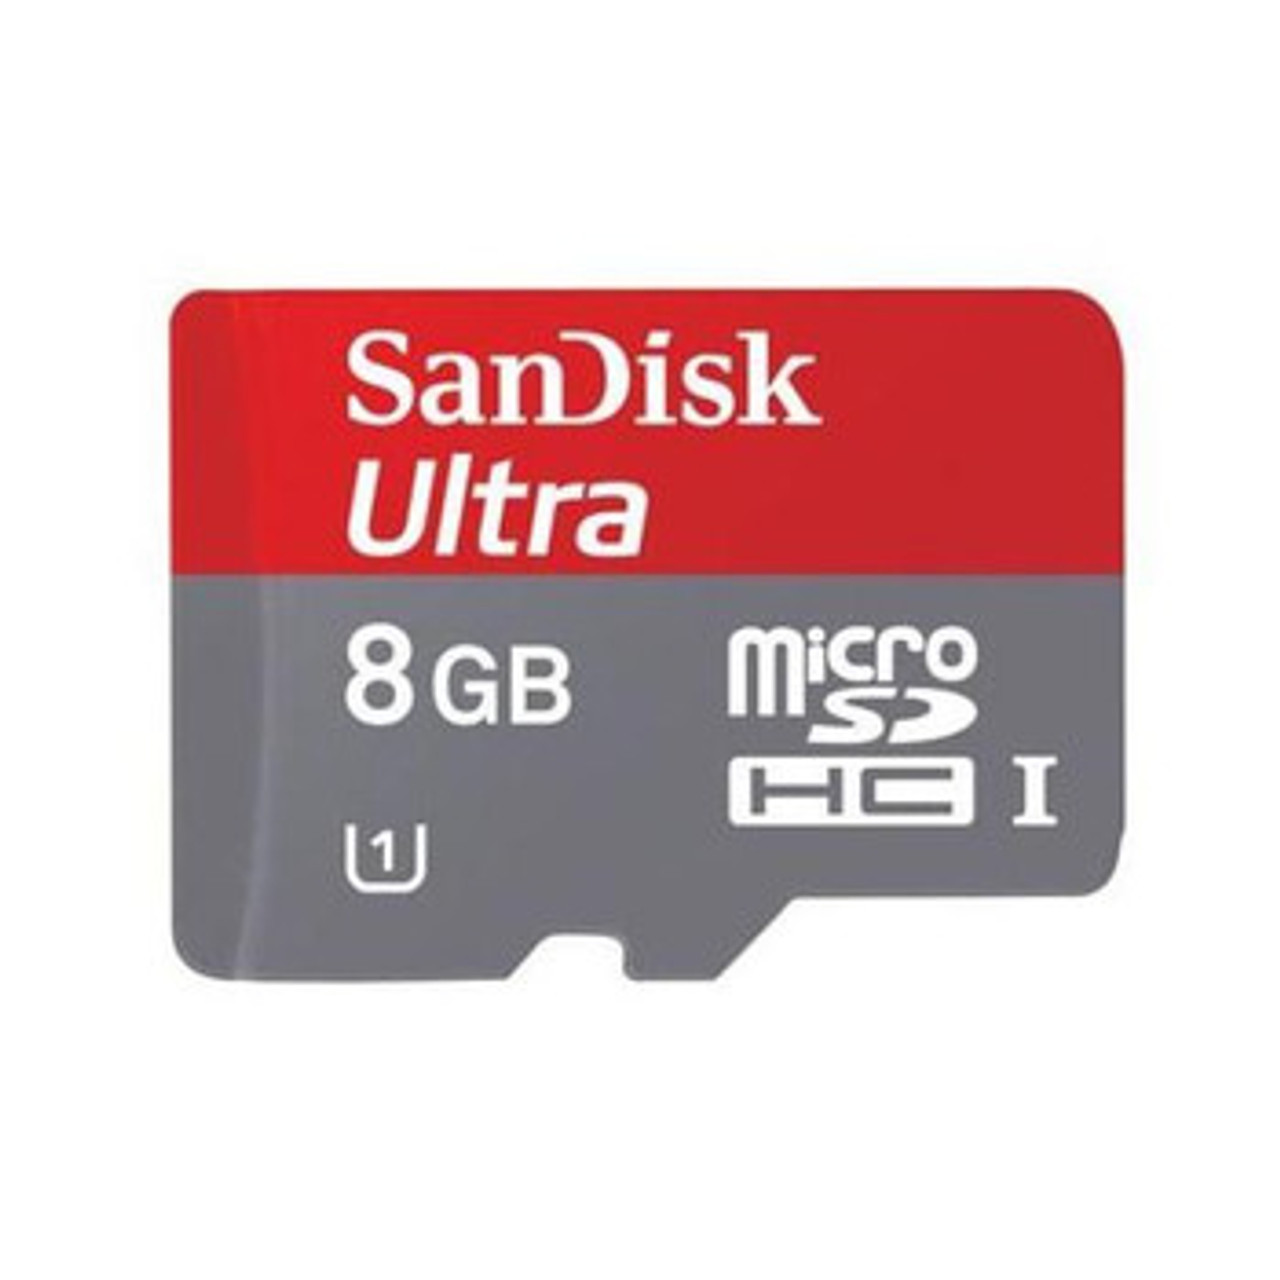 SDSDQUI008GA46 | Sandisk | Ultra 8Gb Class 10 Microsdhc Flash Memory Card